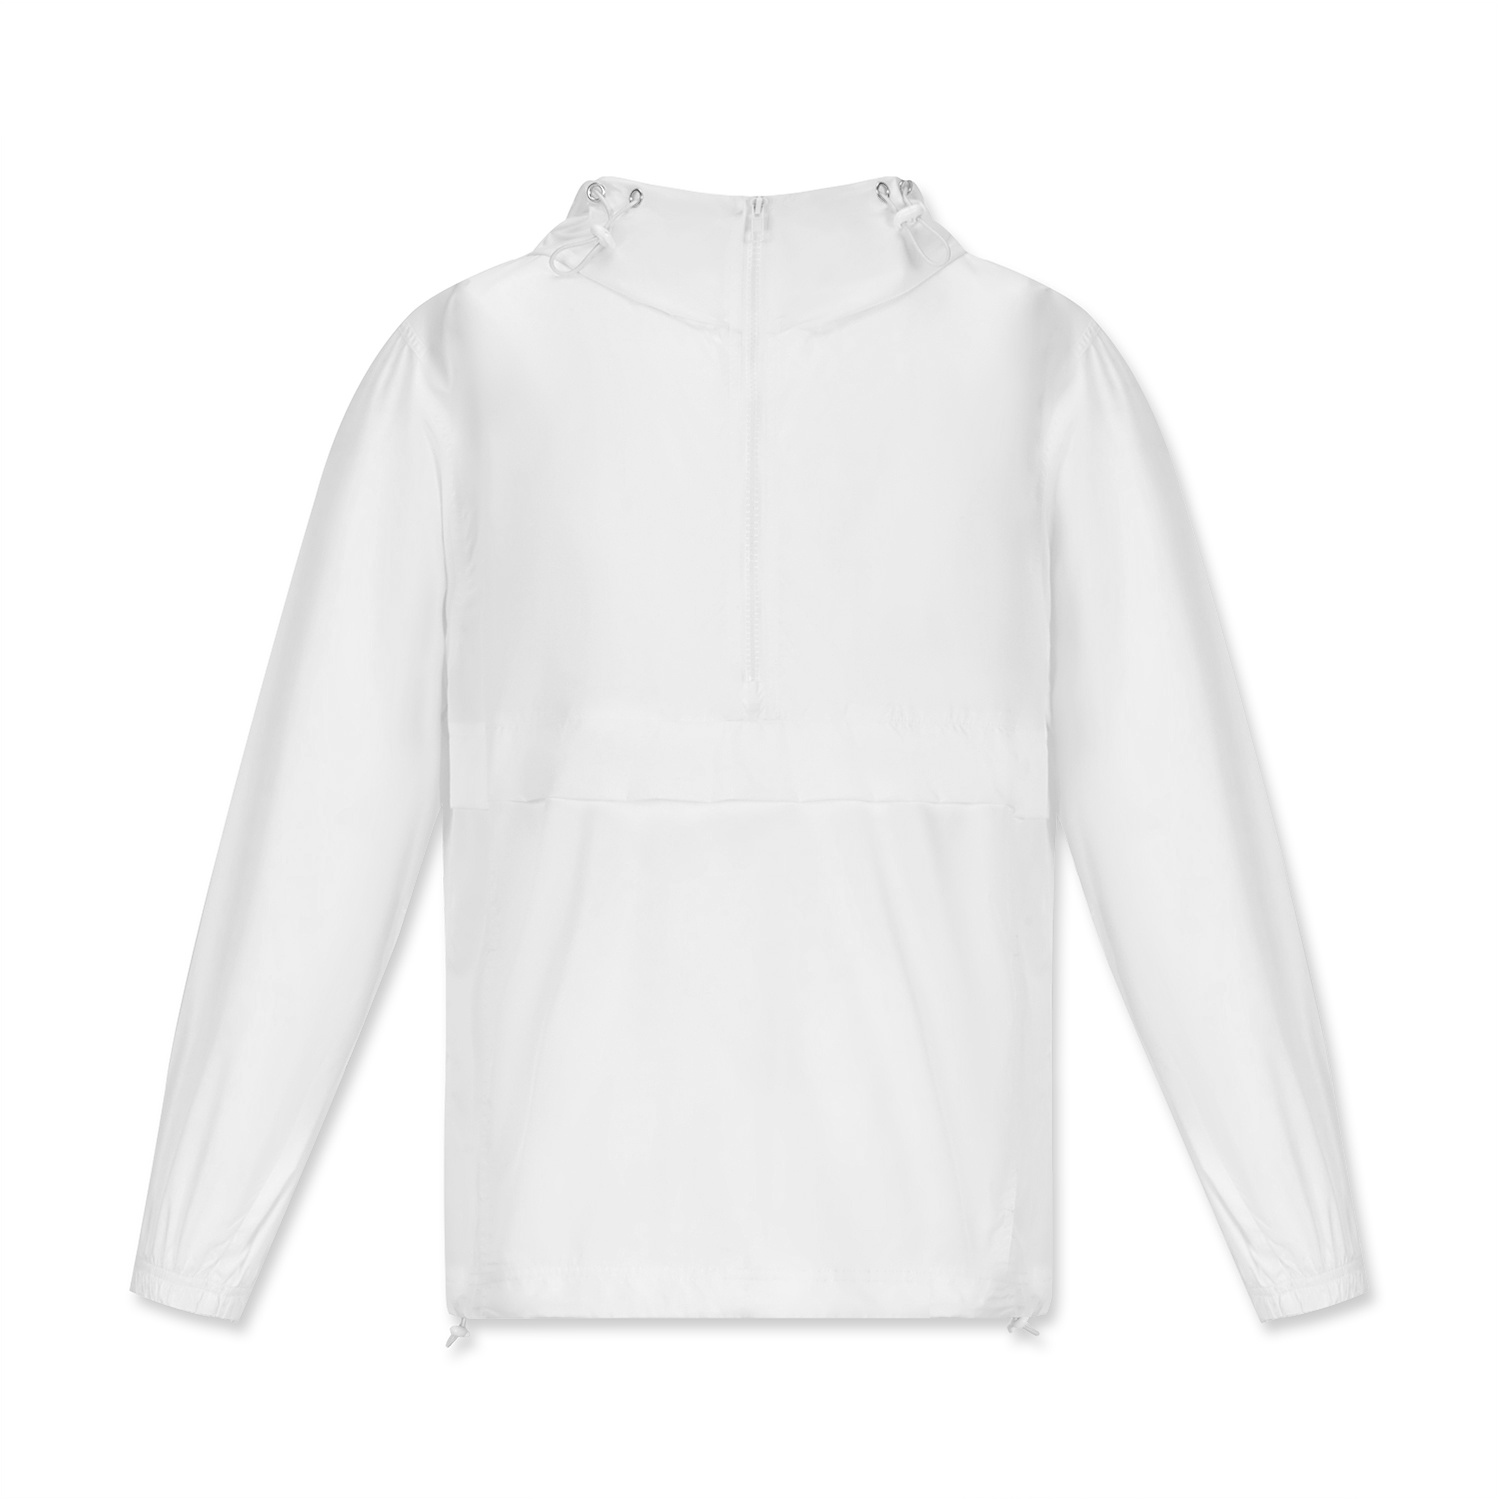 Unisex Half Zip Anorak Hooded Jacket | HugePOD